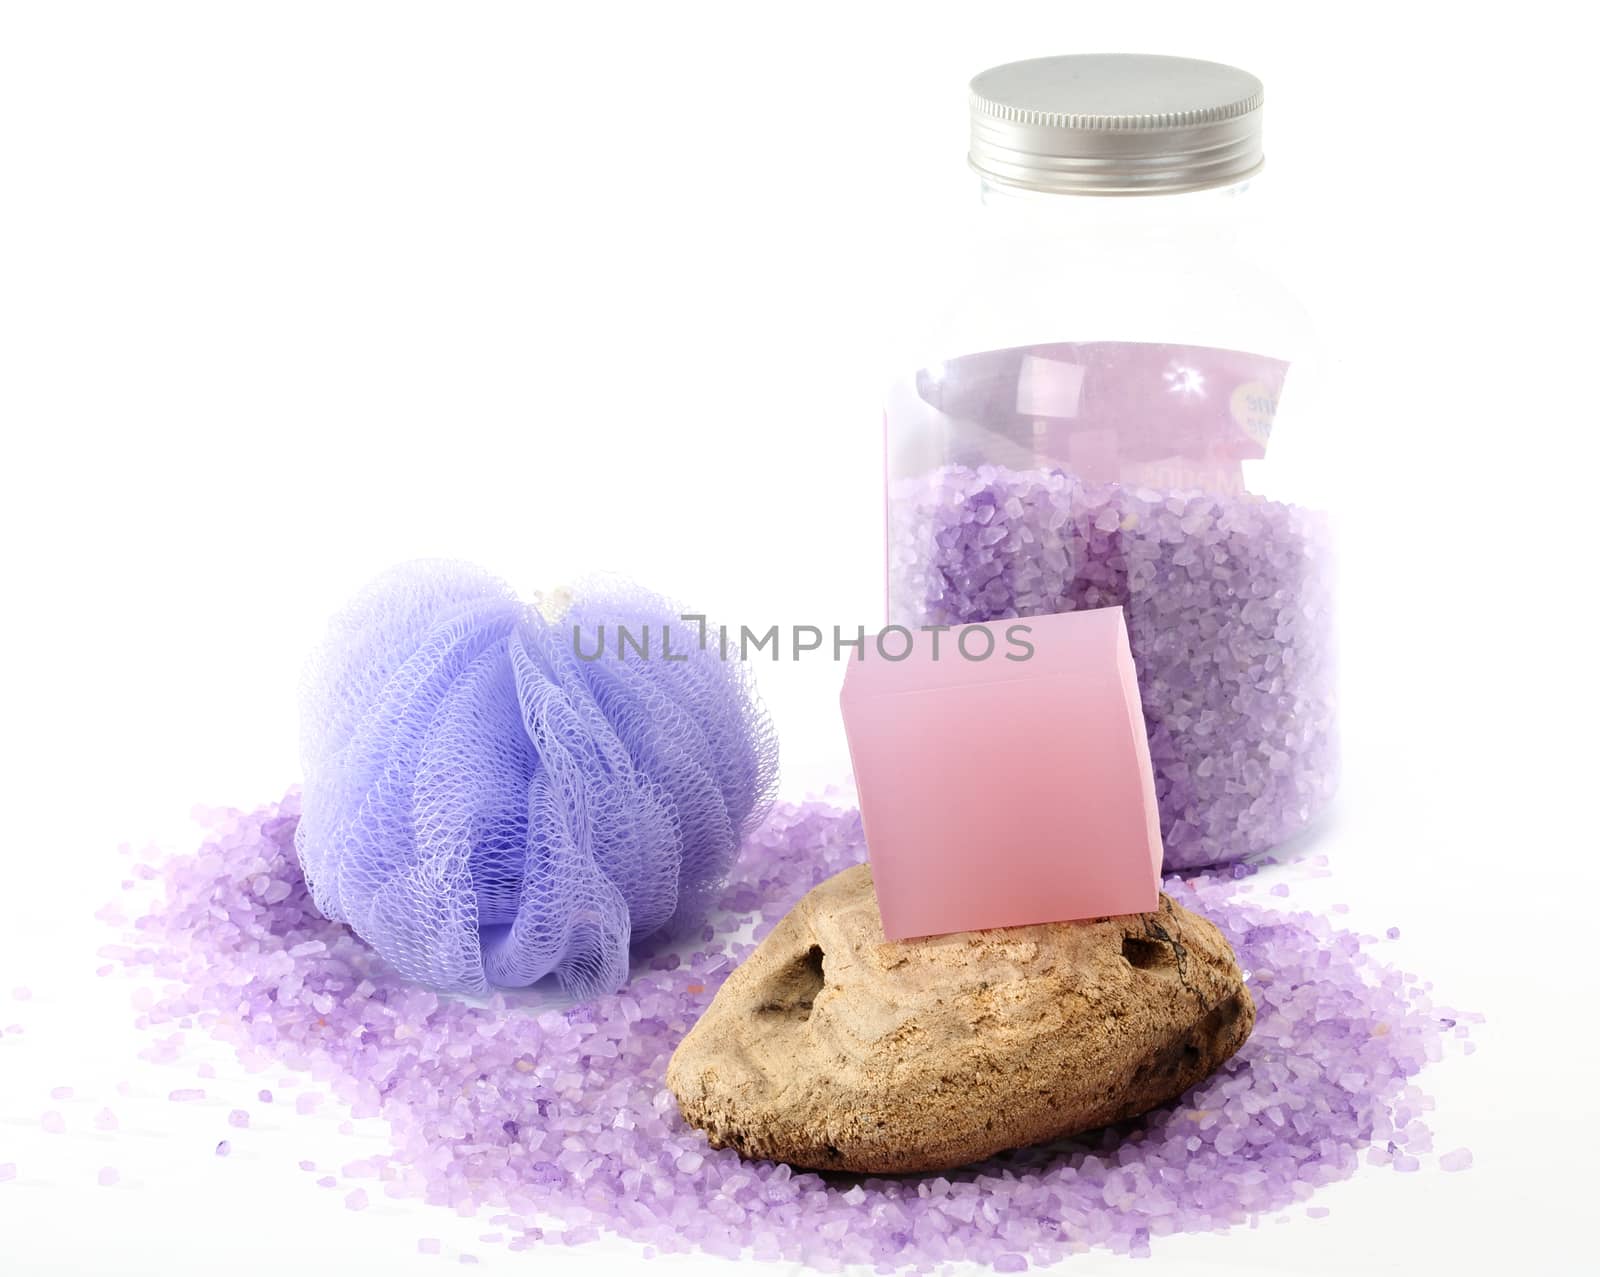 Lavendar and almond oil bar soap and lavender bath salt